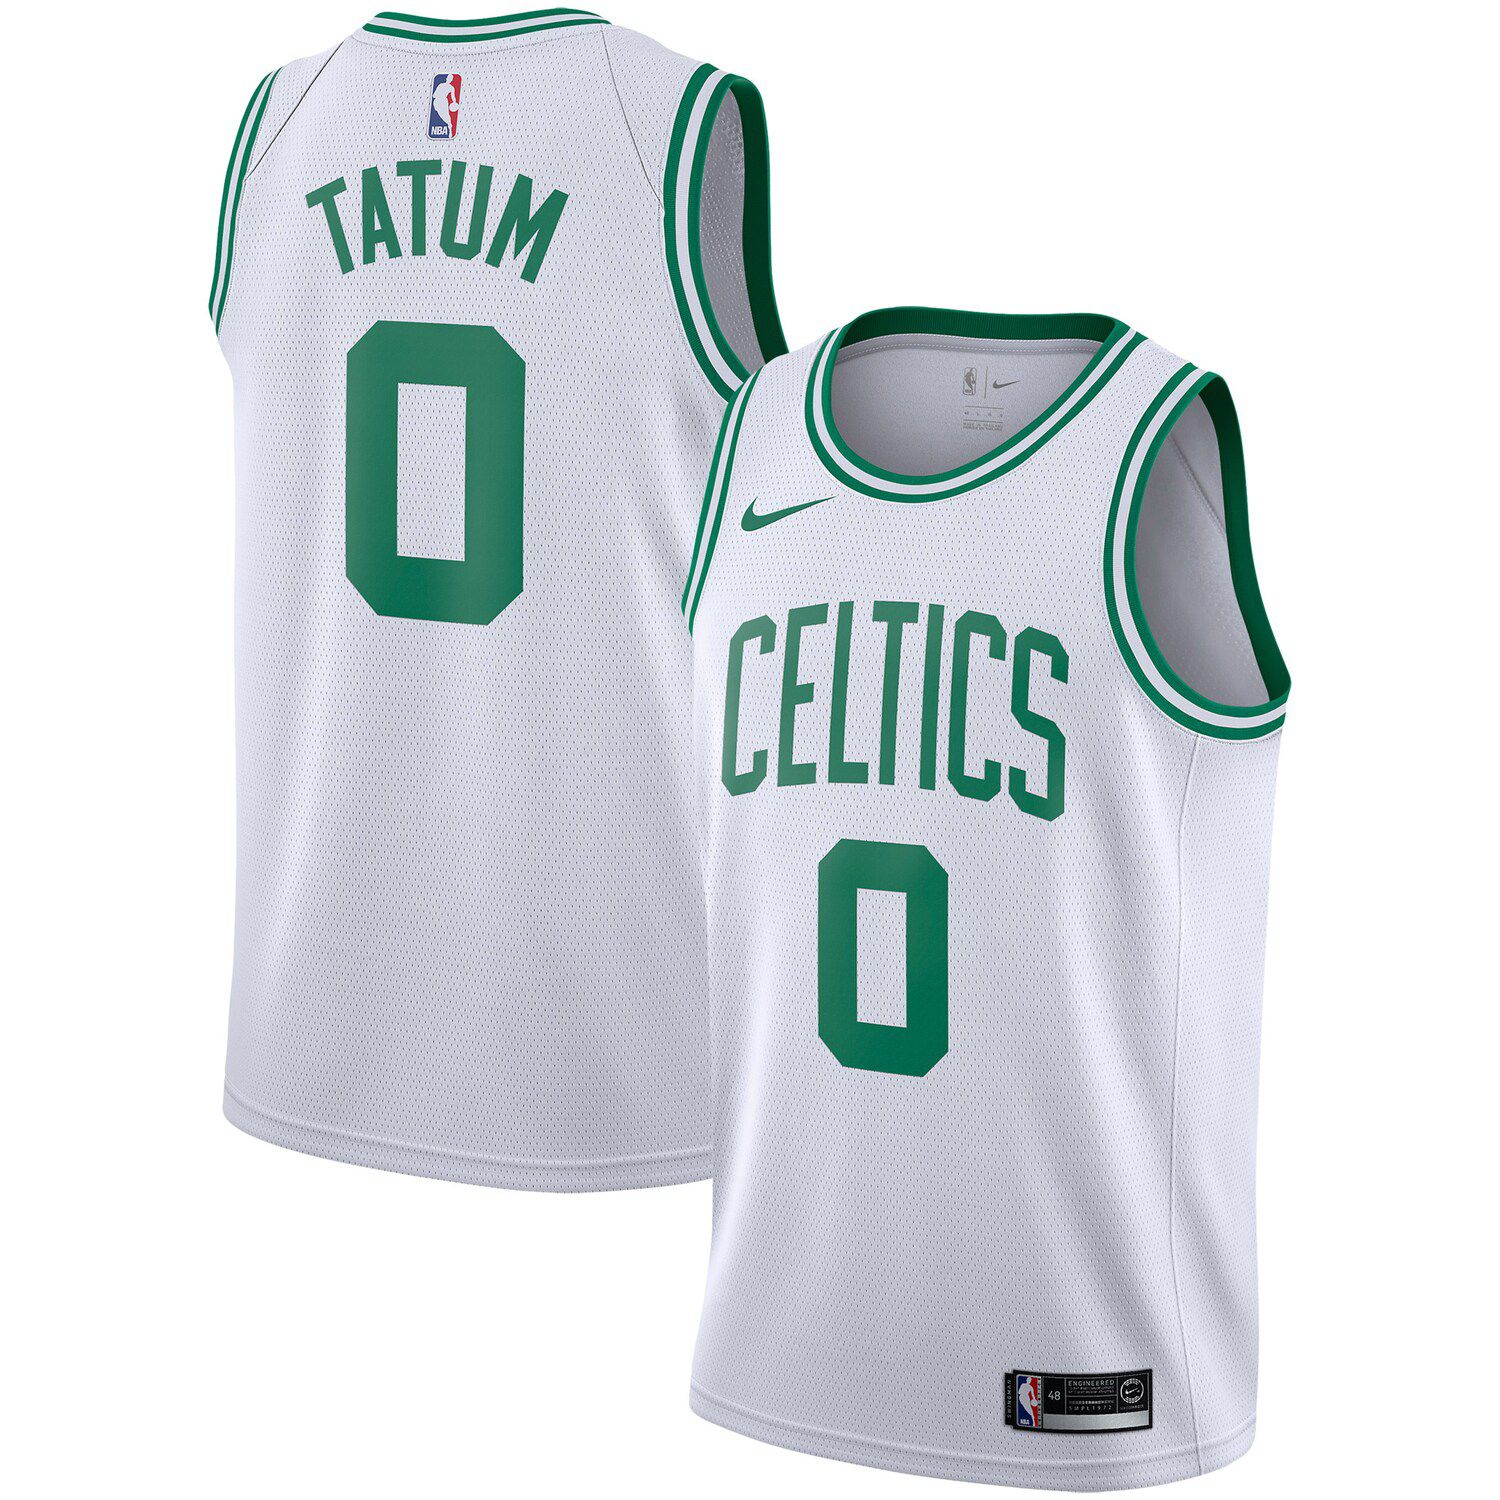 Boston Celtics Swingman Jersey 